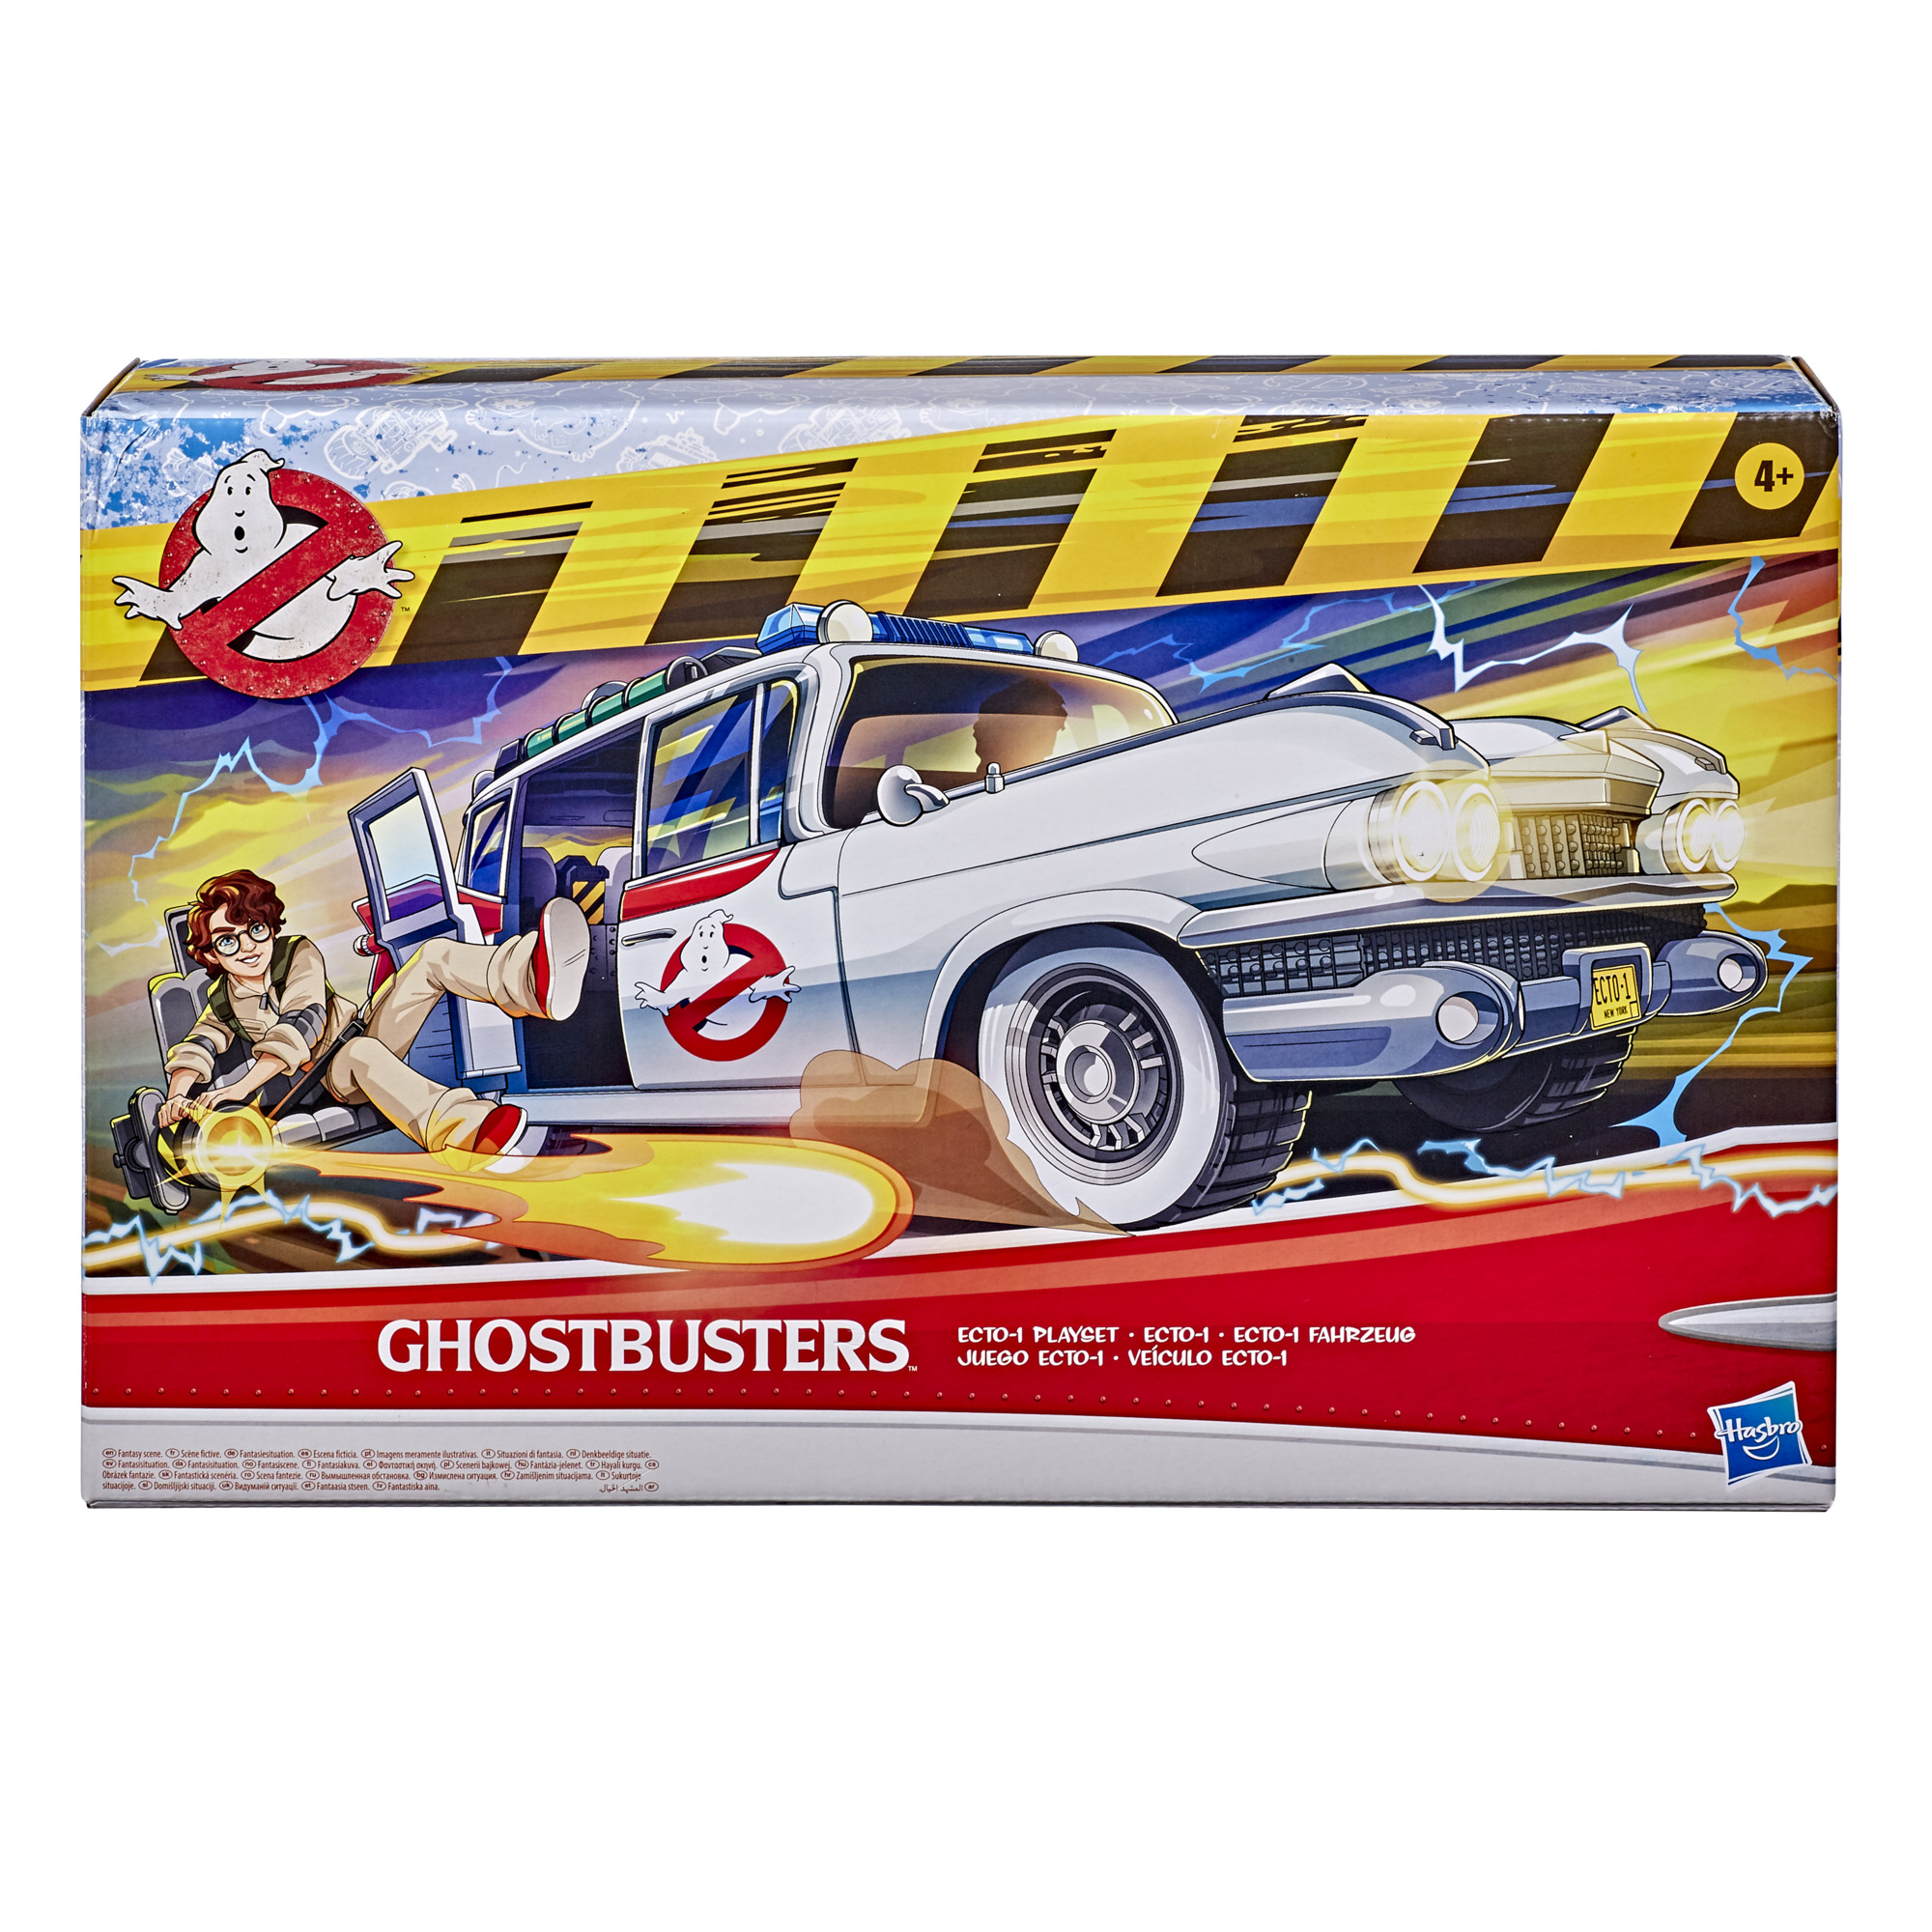 Hasbro Ghostbusters Ecto-1 Playset E95635L0 5010993688876